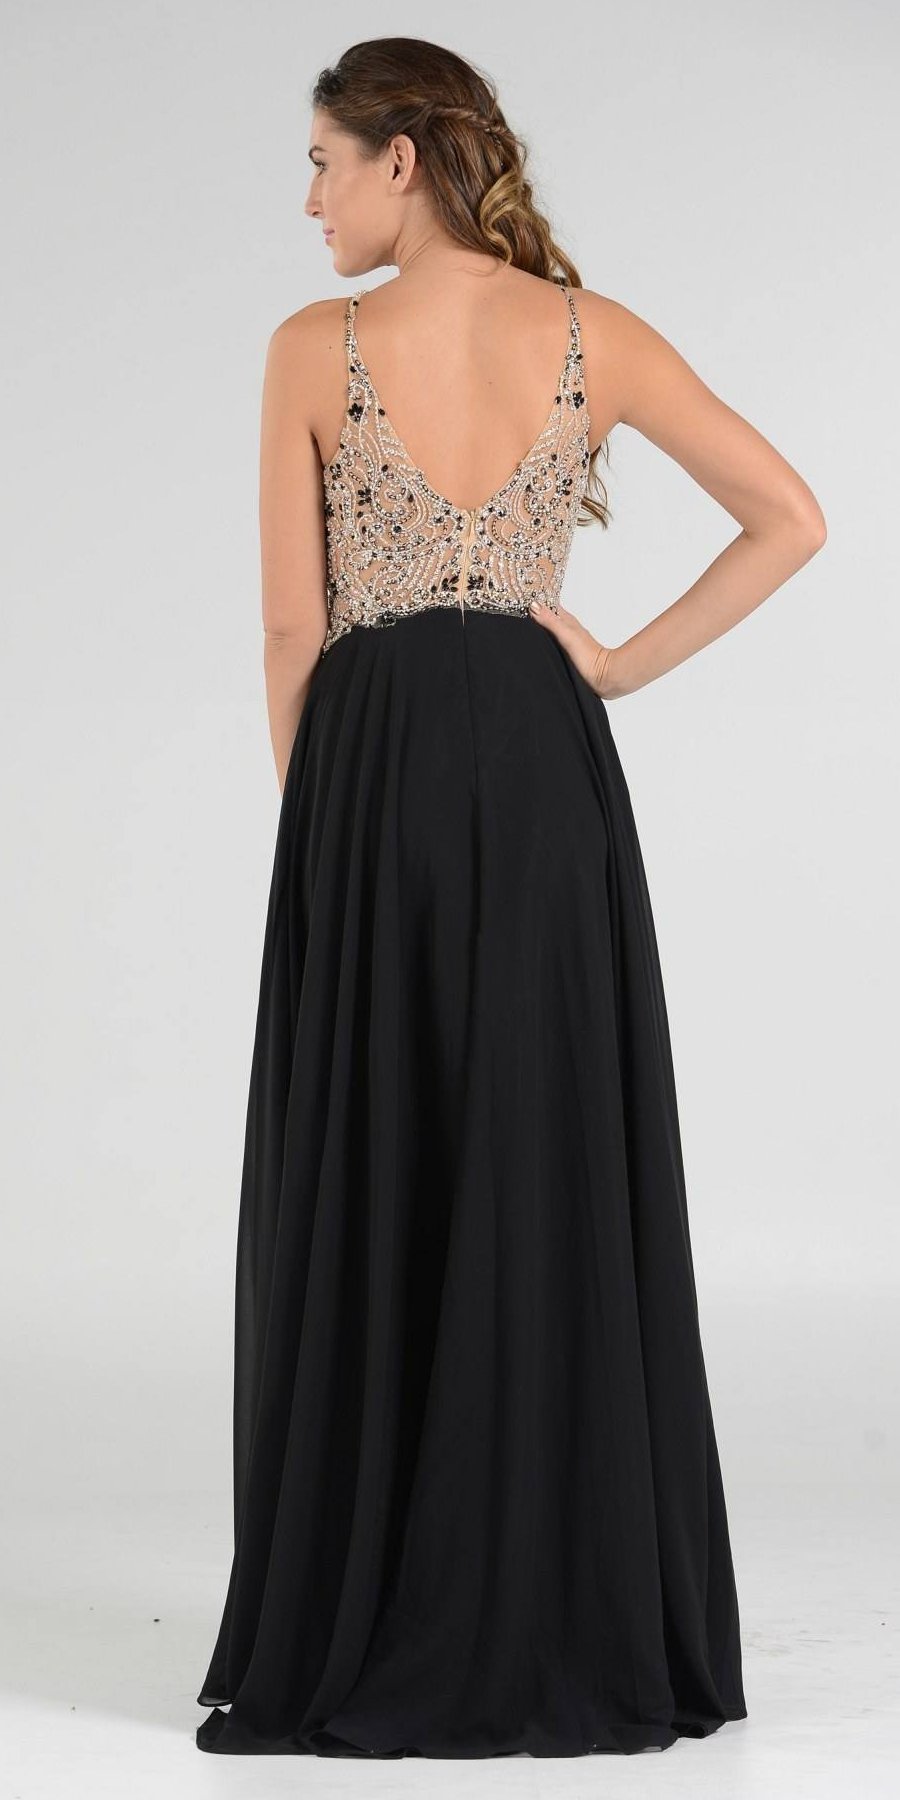 Poly USA 7826 - Halter Beaded Bodice A-Line Chiffon Long Prom Dress Black